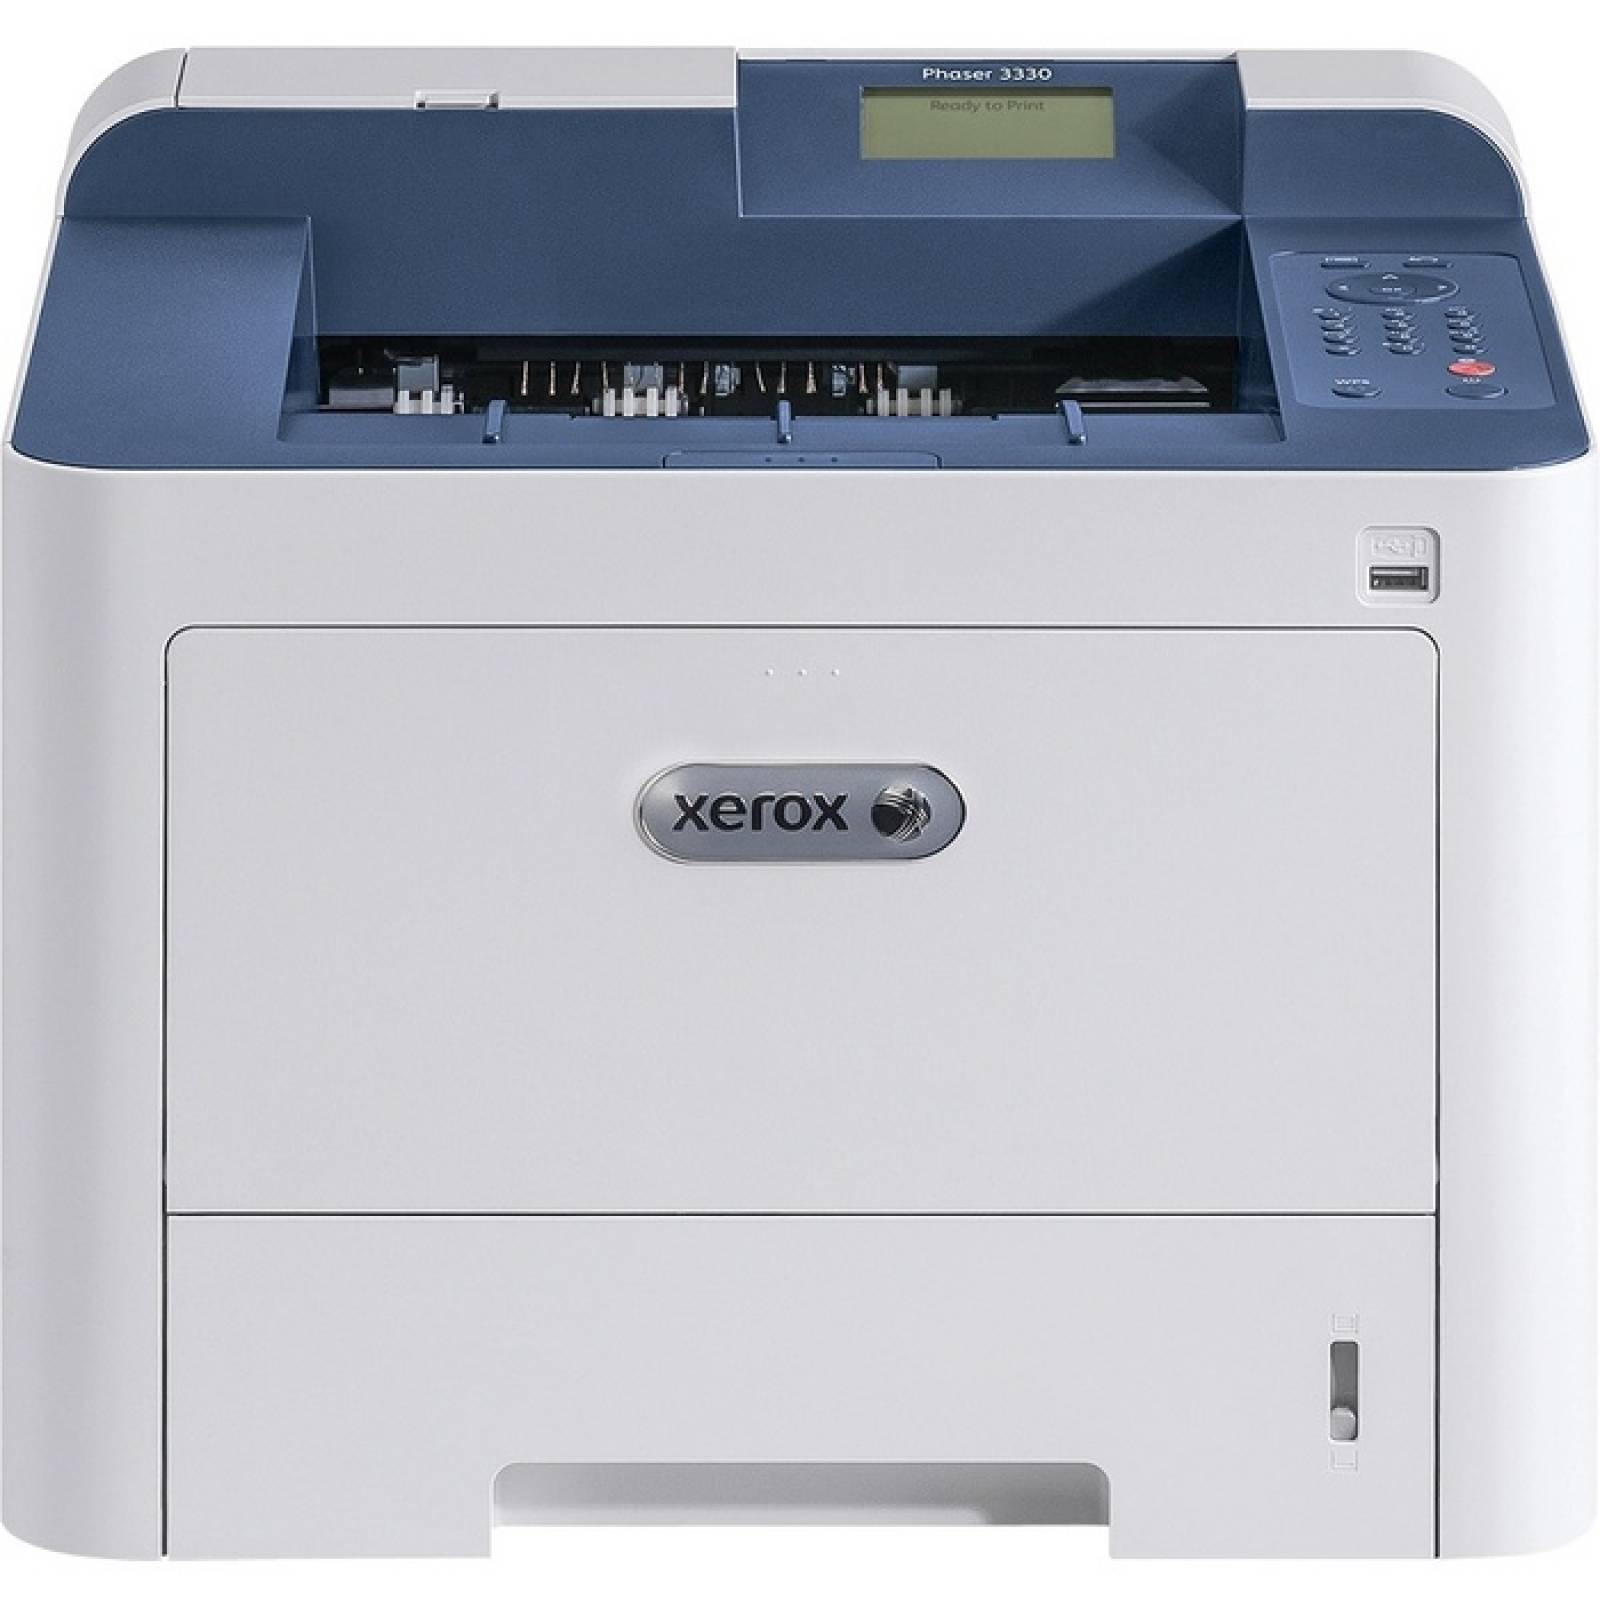 Impresora lser Phaser 3330  DNI de Xerox  Monocromtica  Impresin de 1200 x 1200 ppp  Impresin en papel normal  